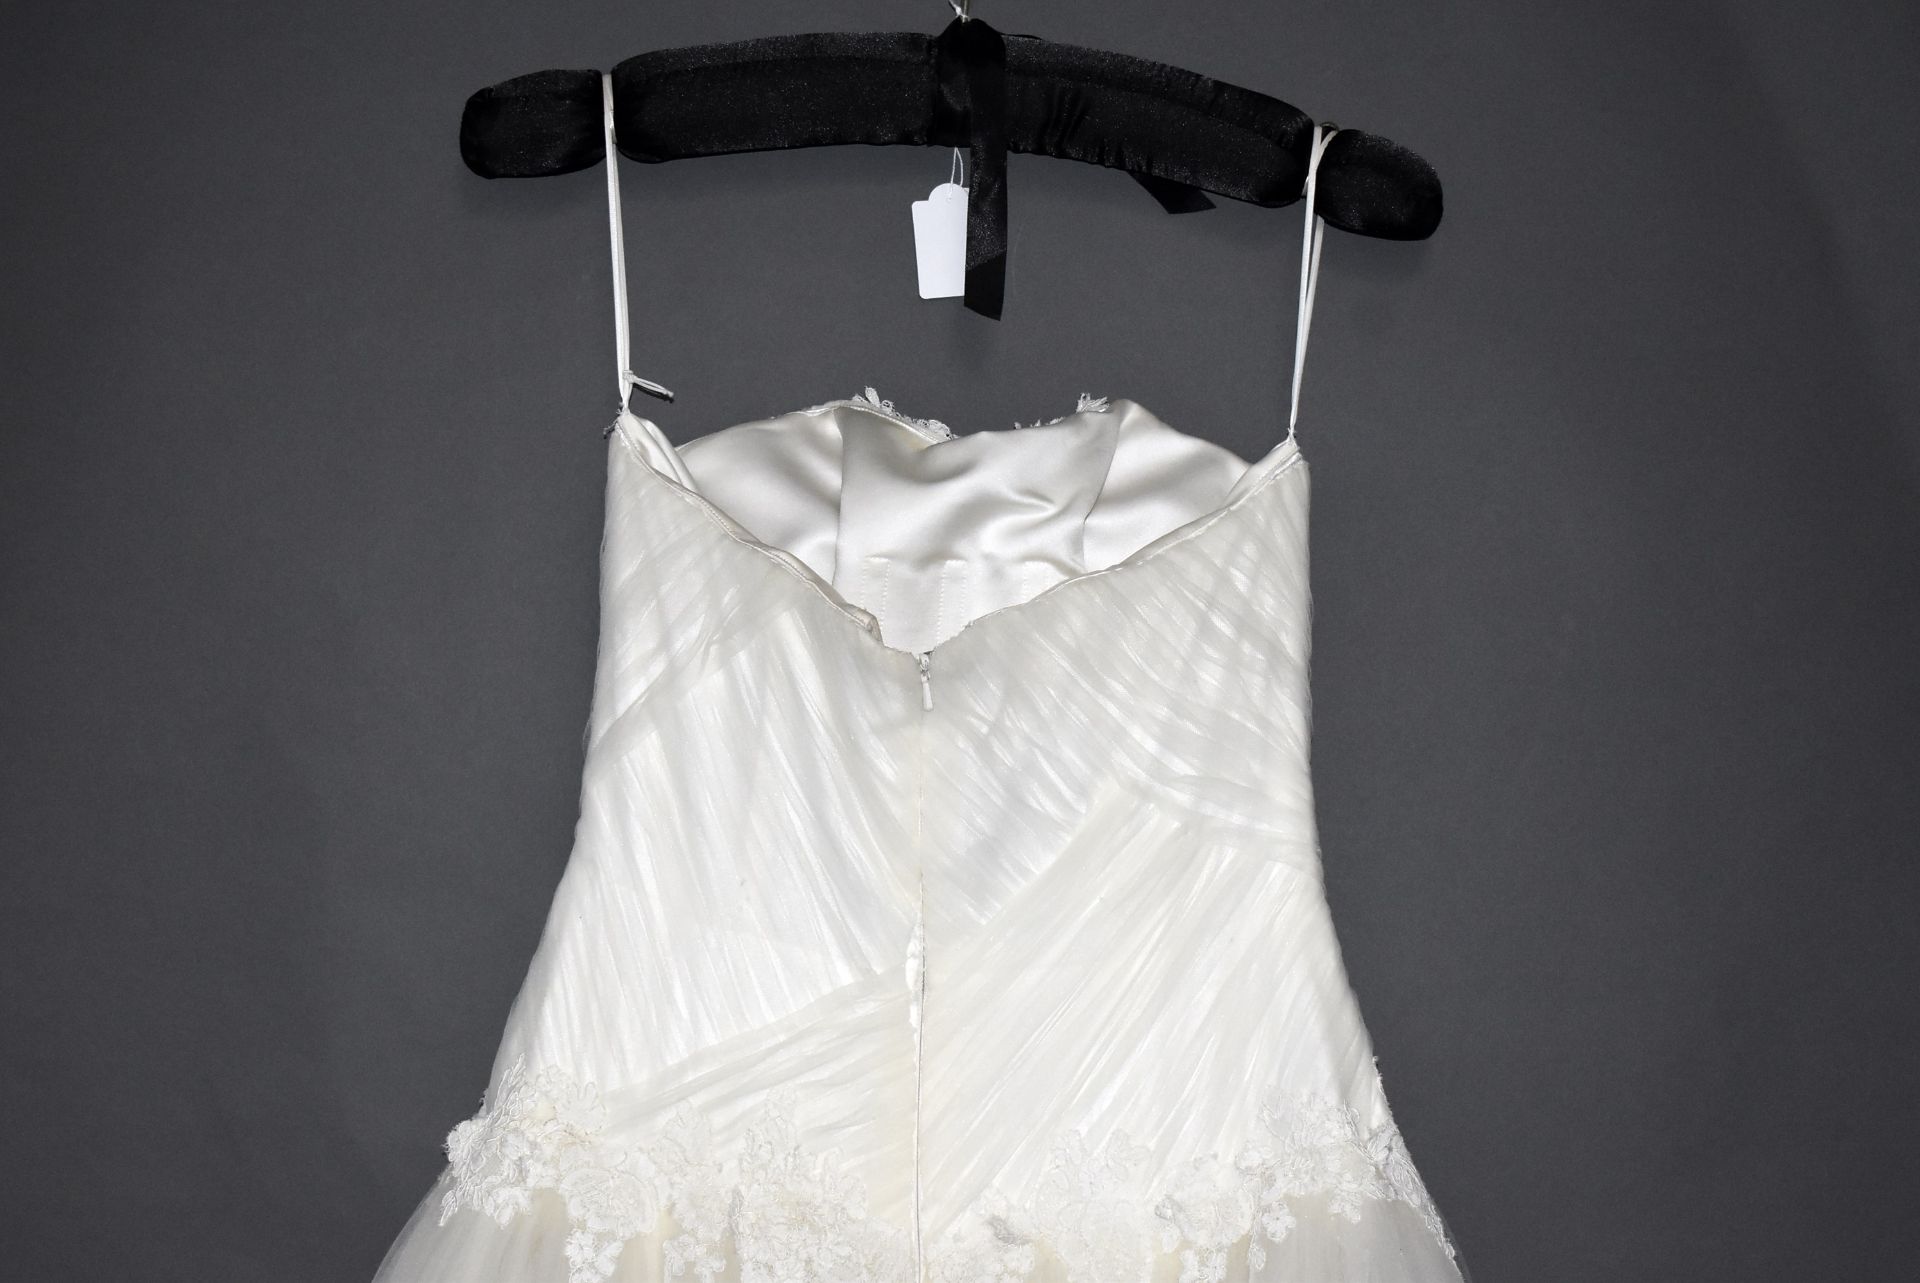 1 x LUSAN MANDONGUS Strapless Chiffon And Lace Designer Wedding Dress Bridal Gown RRP £2,600 UK 12 - Image 6 of 6